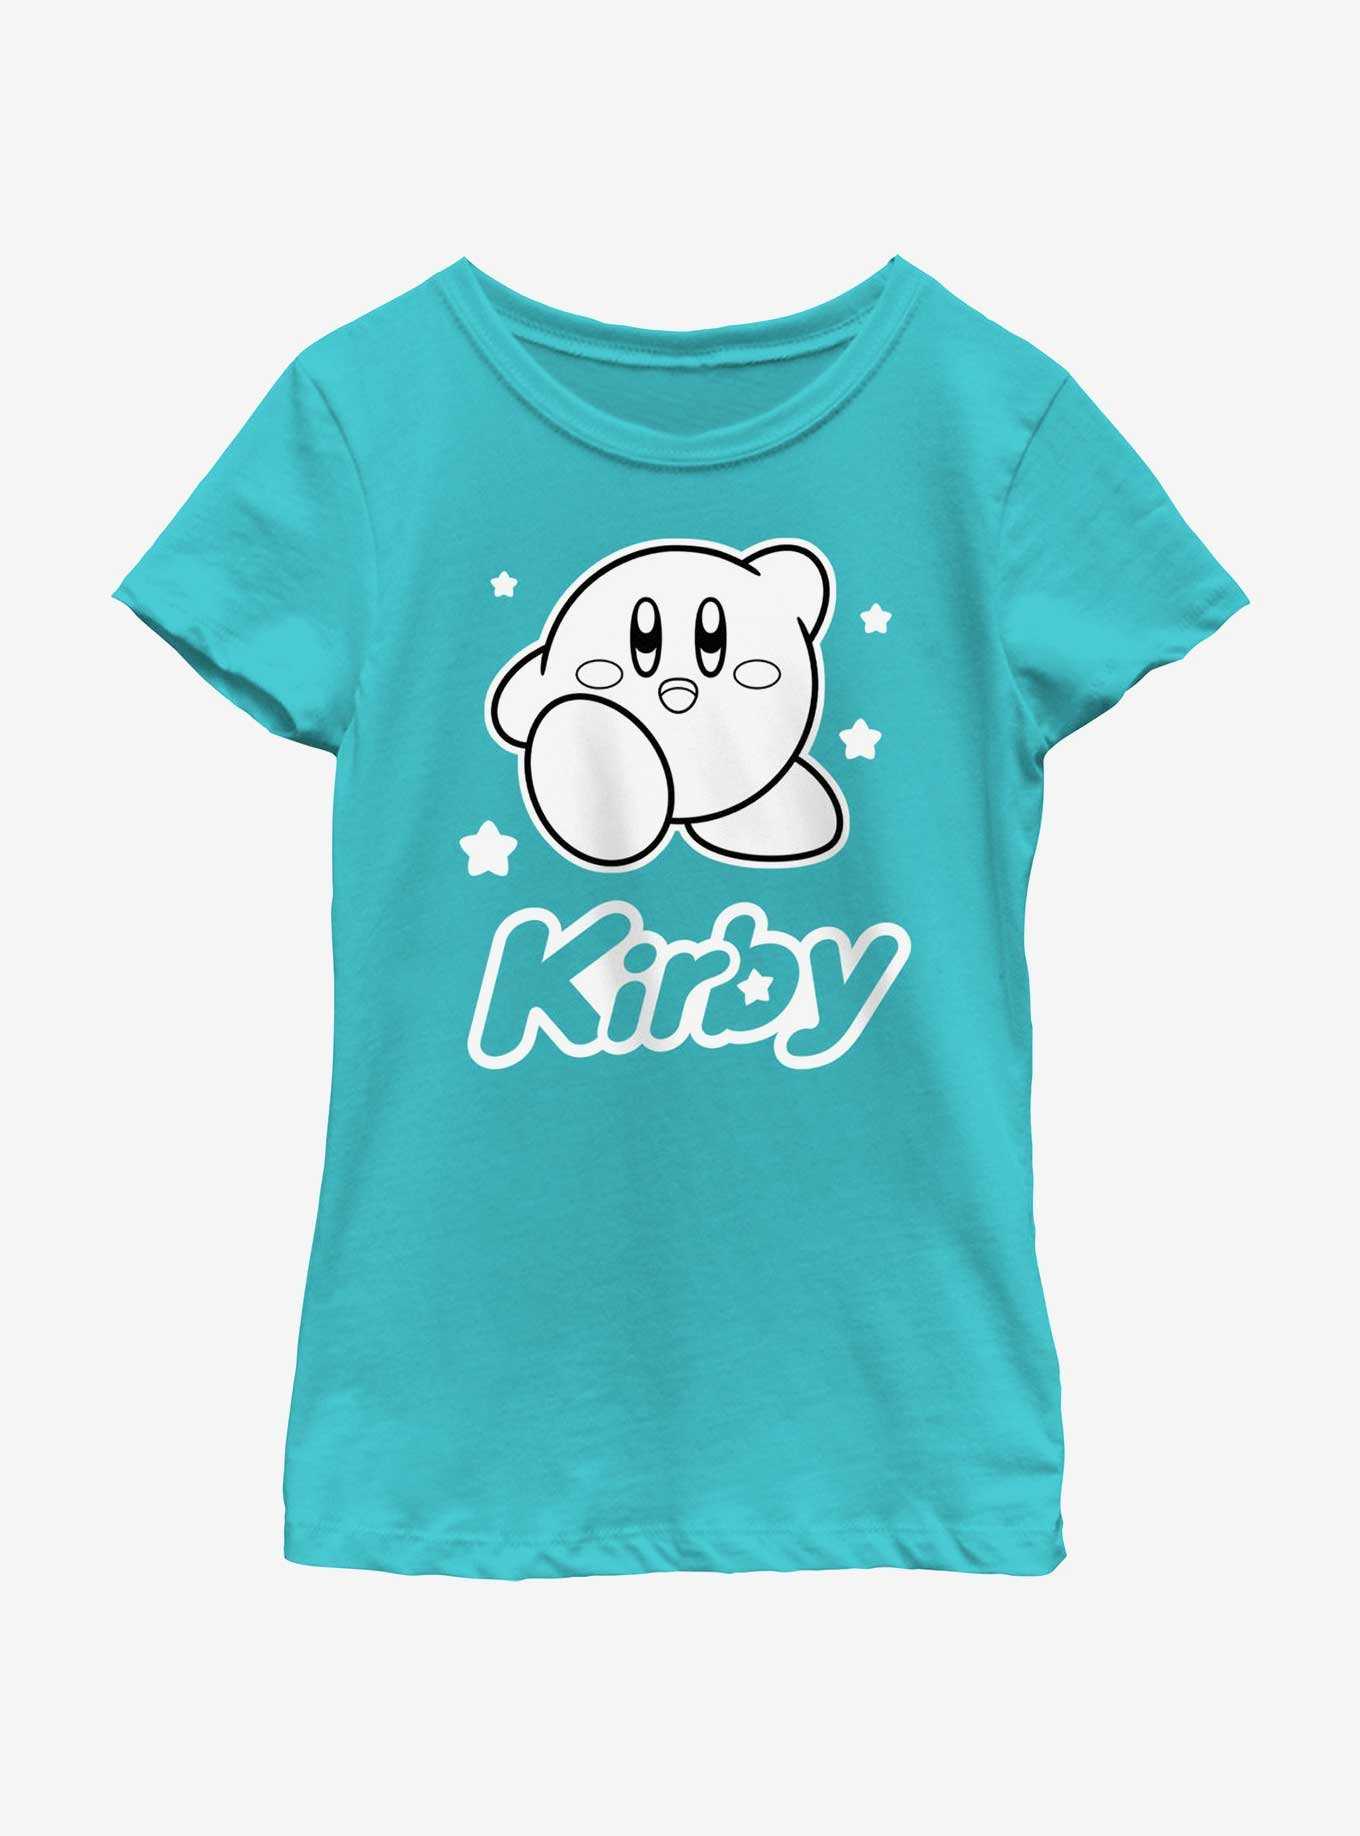 Kirby Star Pose Youth Girls T-Shirt, , hi-res